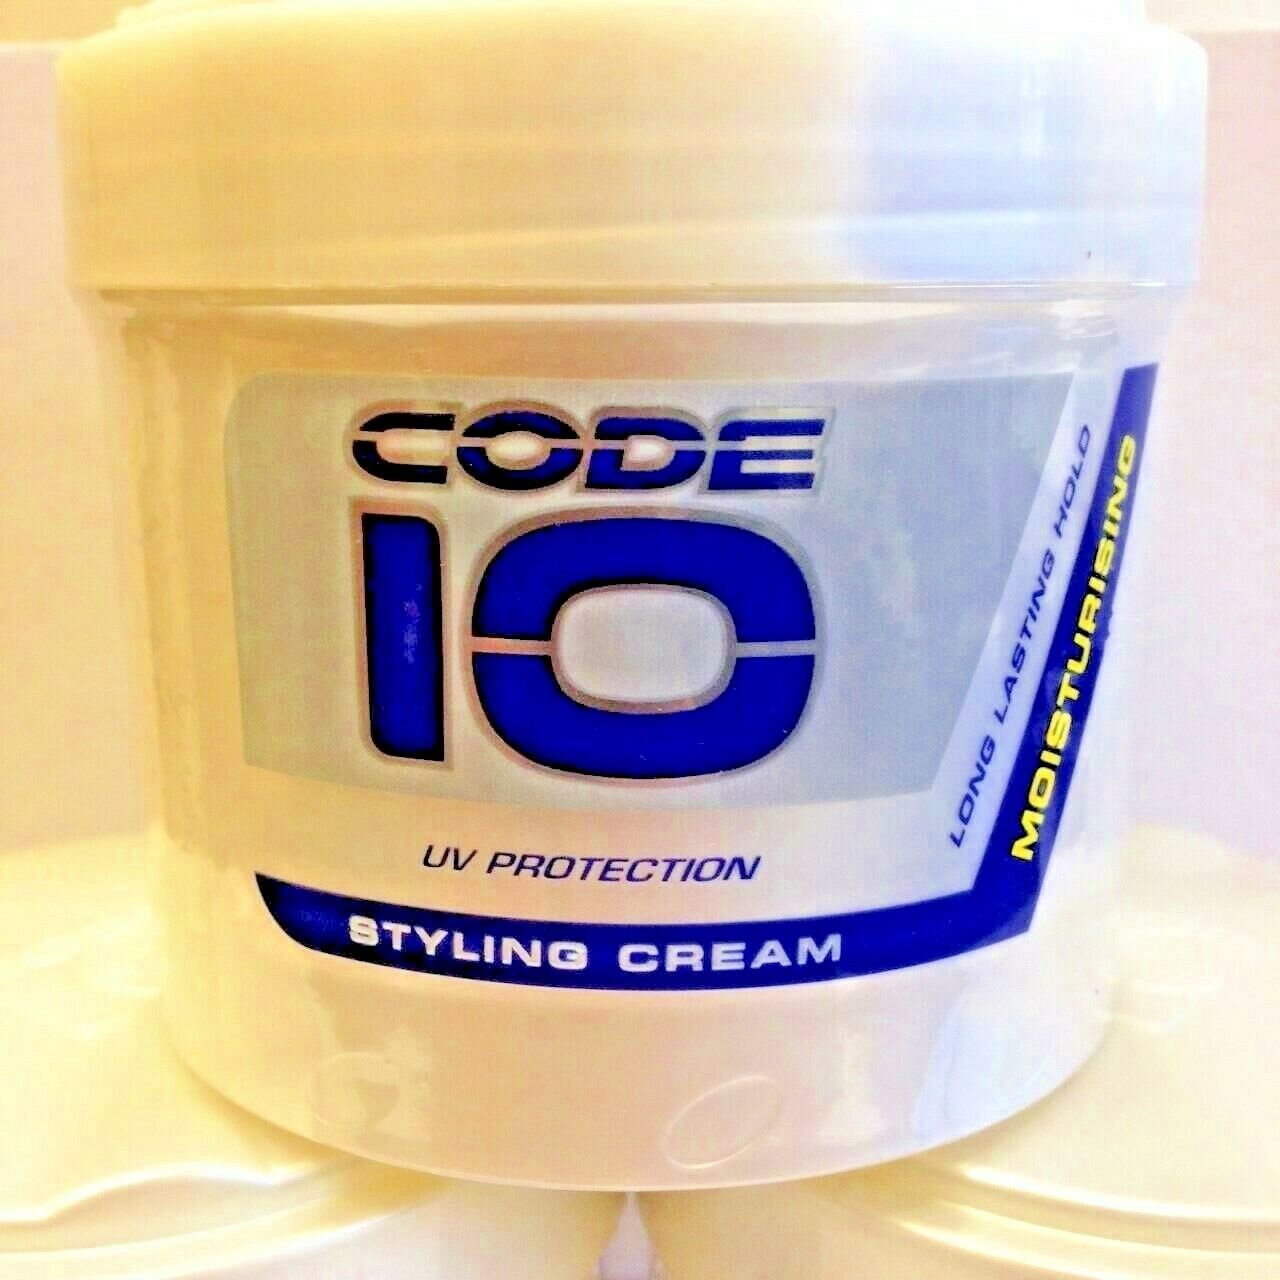 Code 10 Hair Styling Cream from Marico's- Moisturizing- 250ml 9556031080869  | eBay